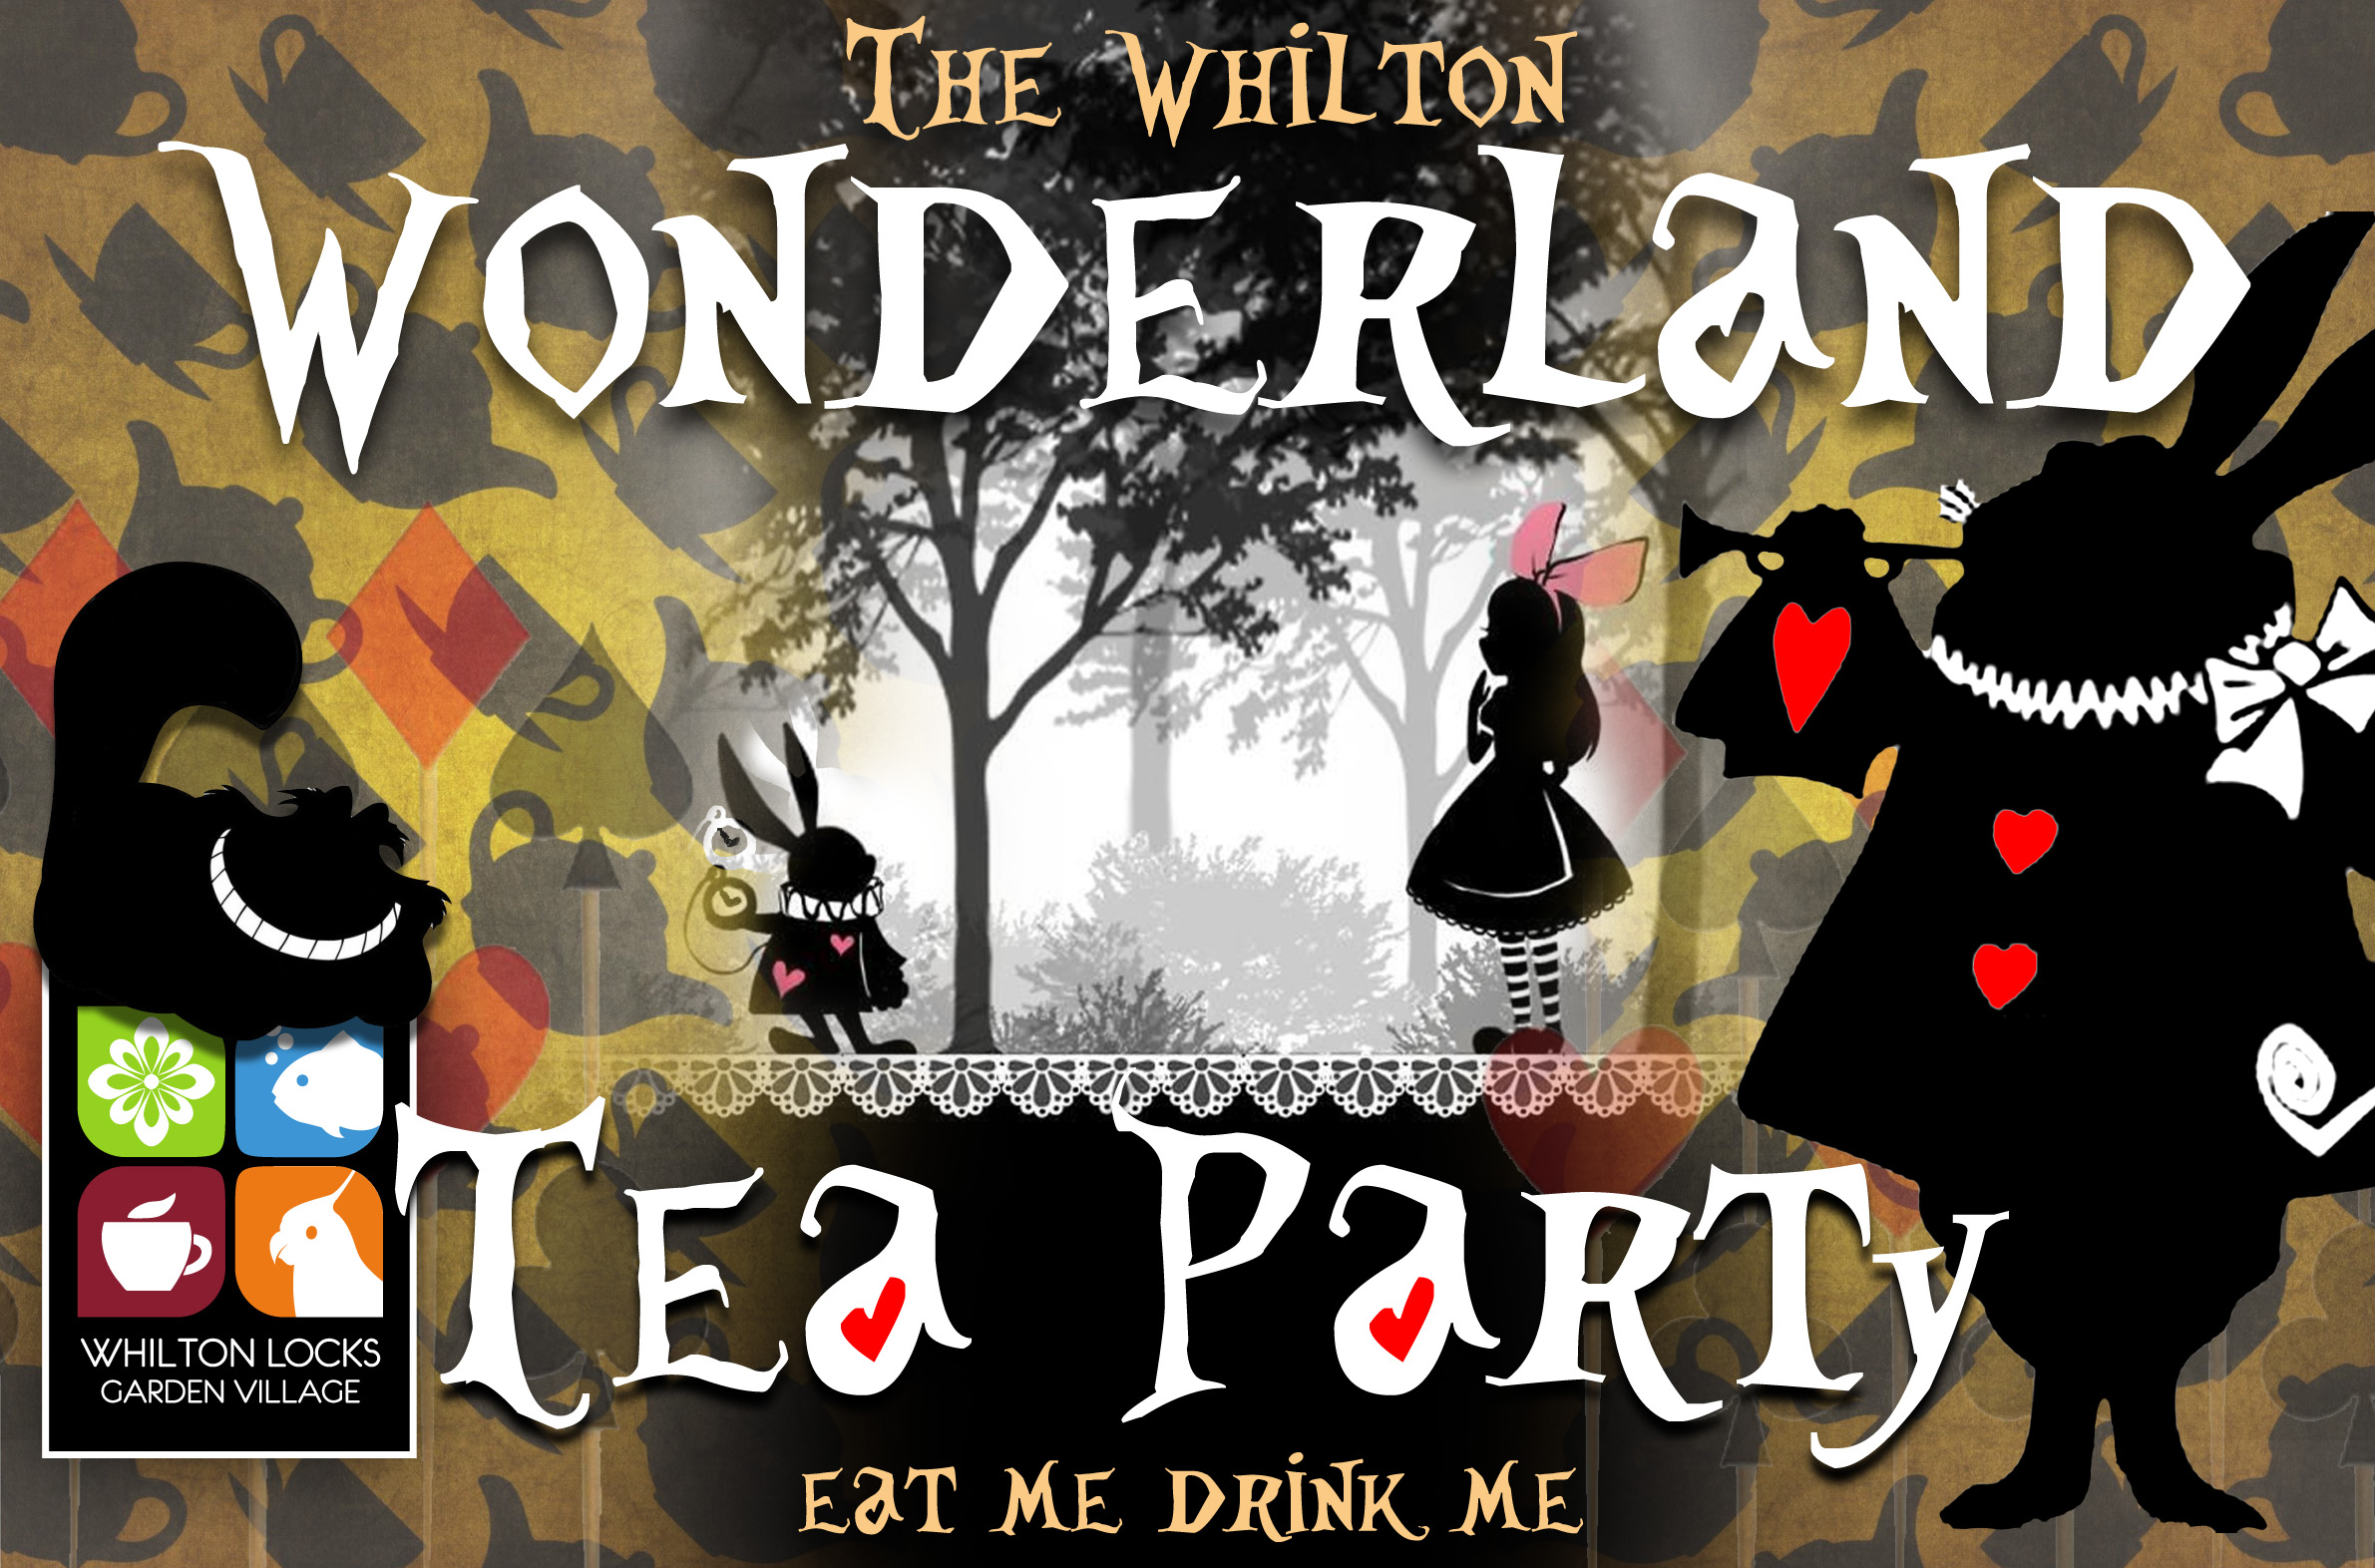 Alice in Wonderland Afternoon Tea at whilton locks